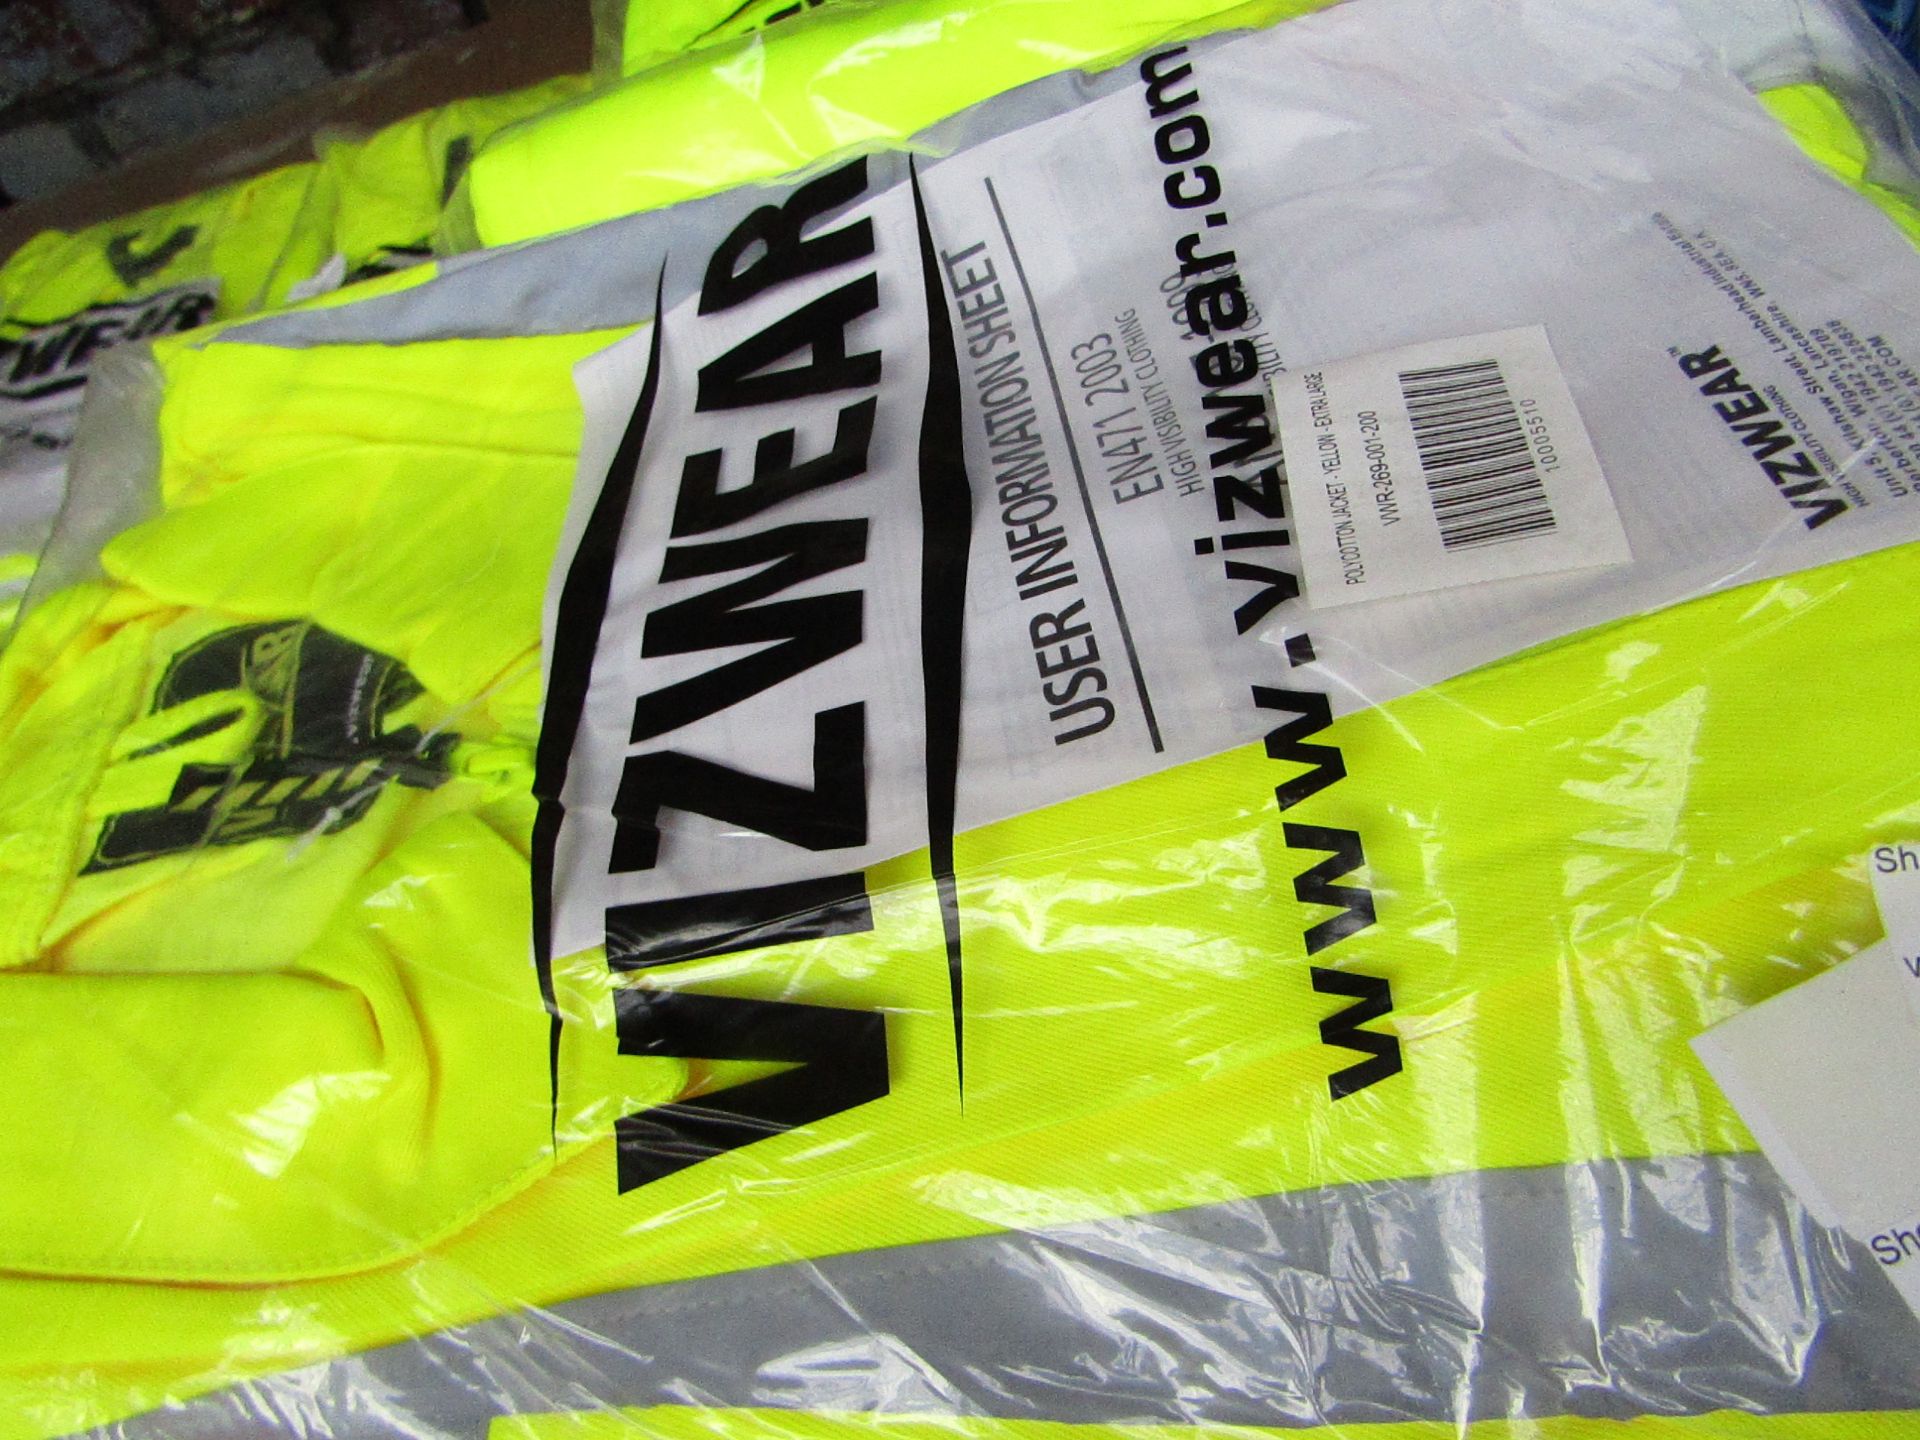 VIZWEAR SET - 1x Vizwear - Polycotton Jacket Hi-Vis Yellow - Size XL - Unused & Packaged. 1x Vizwear